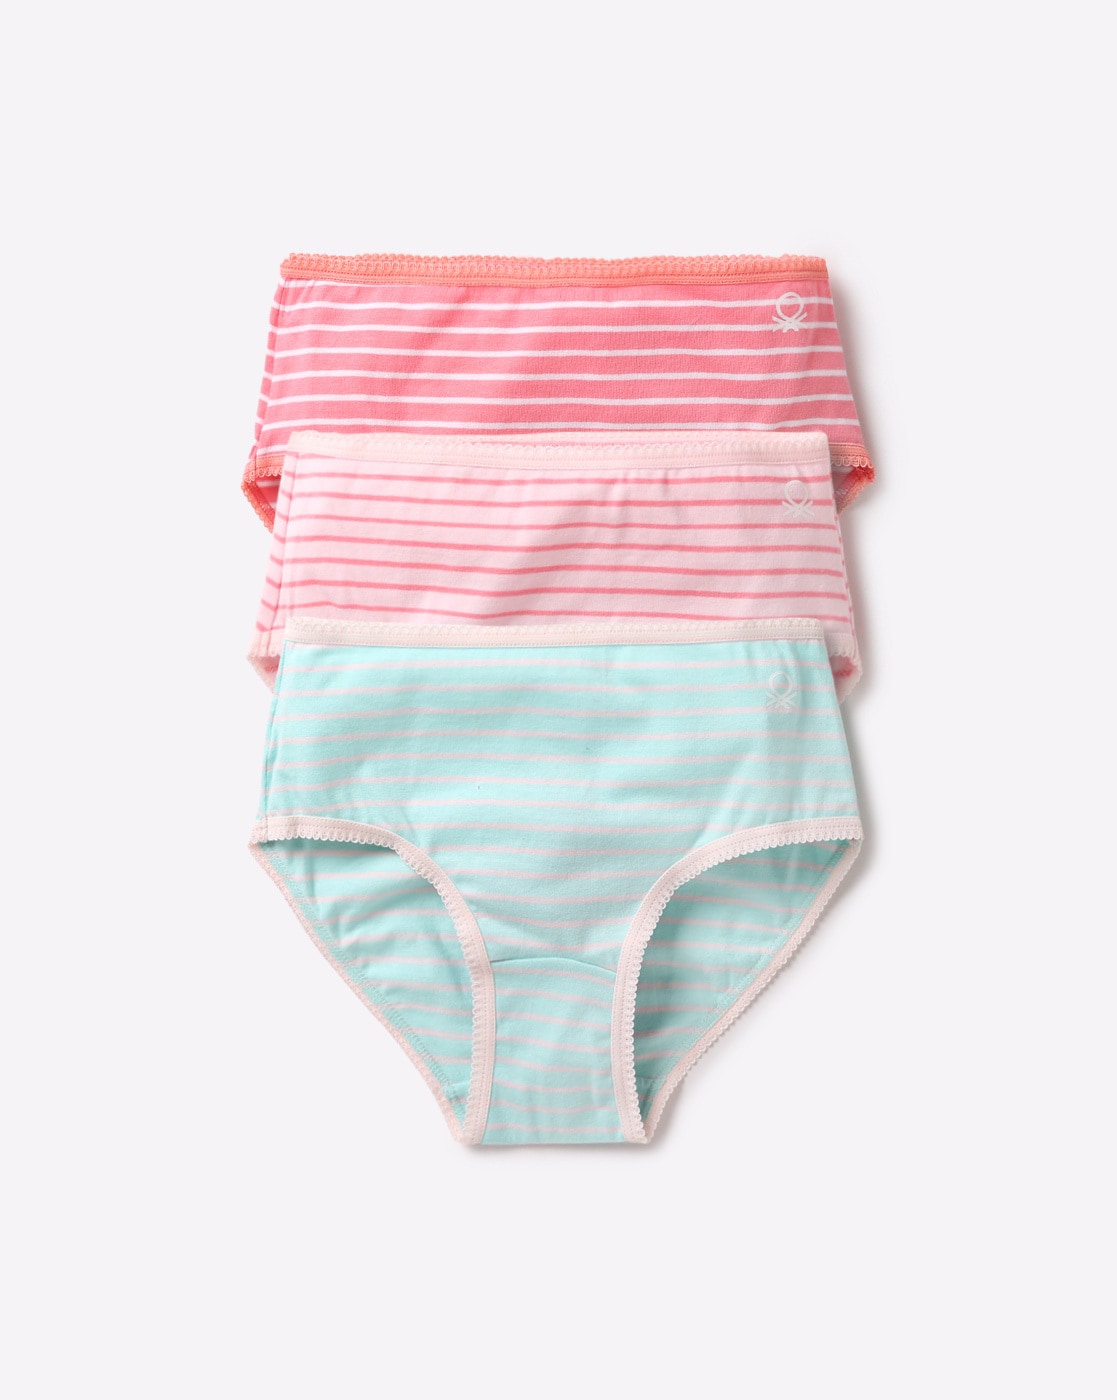 Buy panties Online  Undercolors of Benetton Seamless Panty